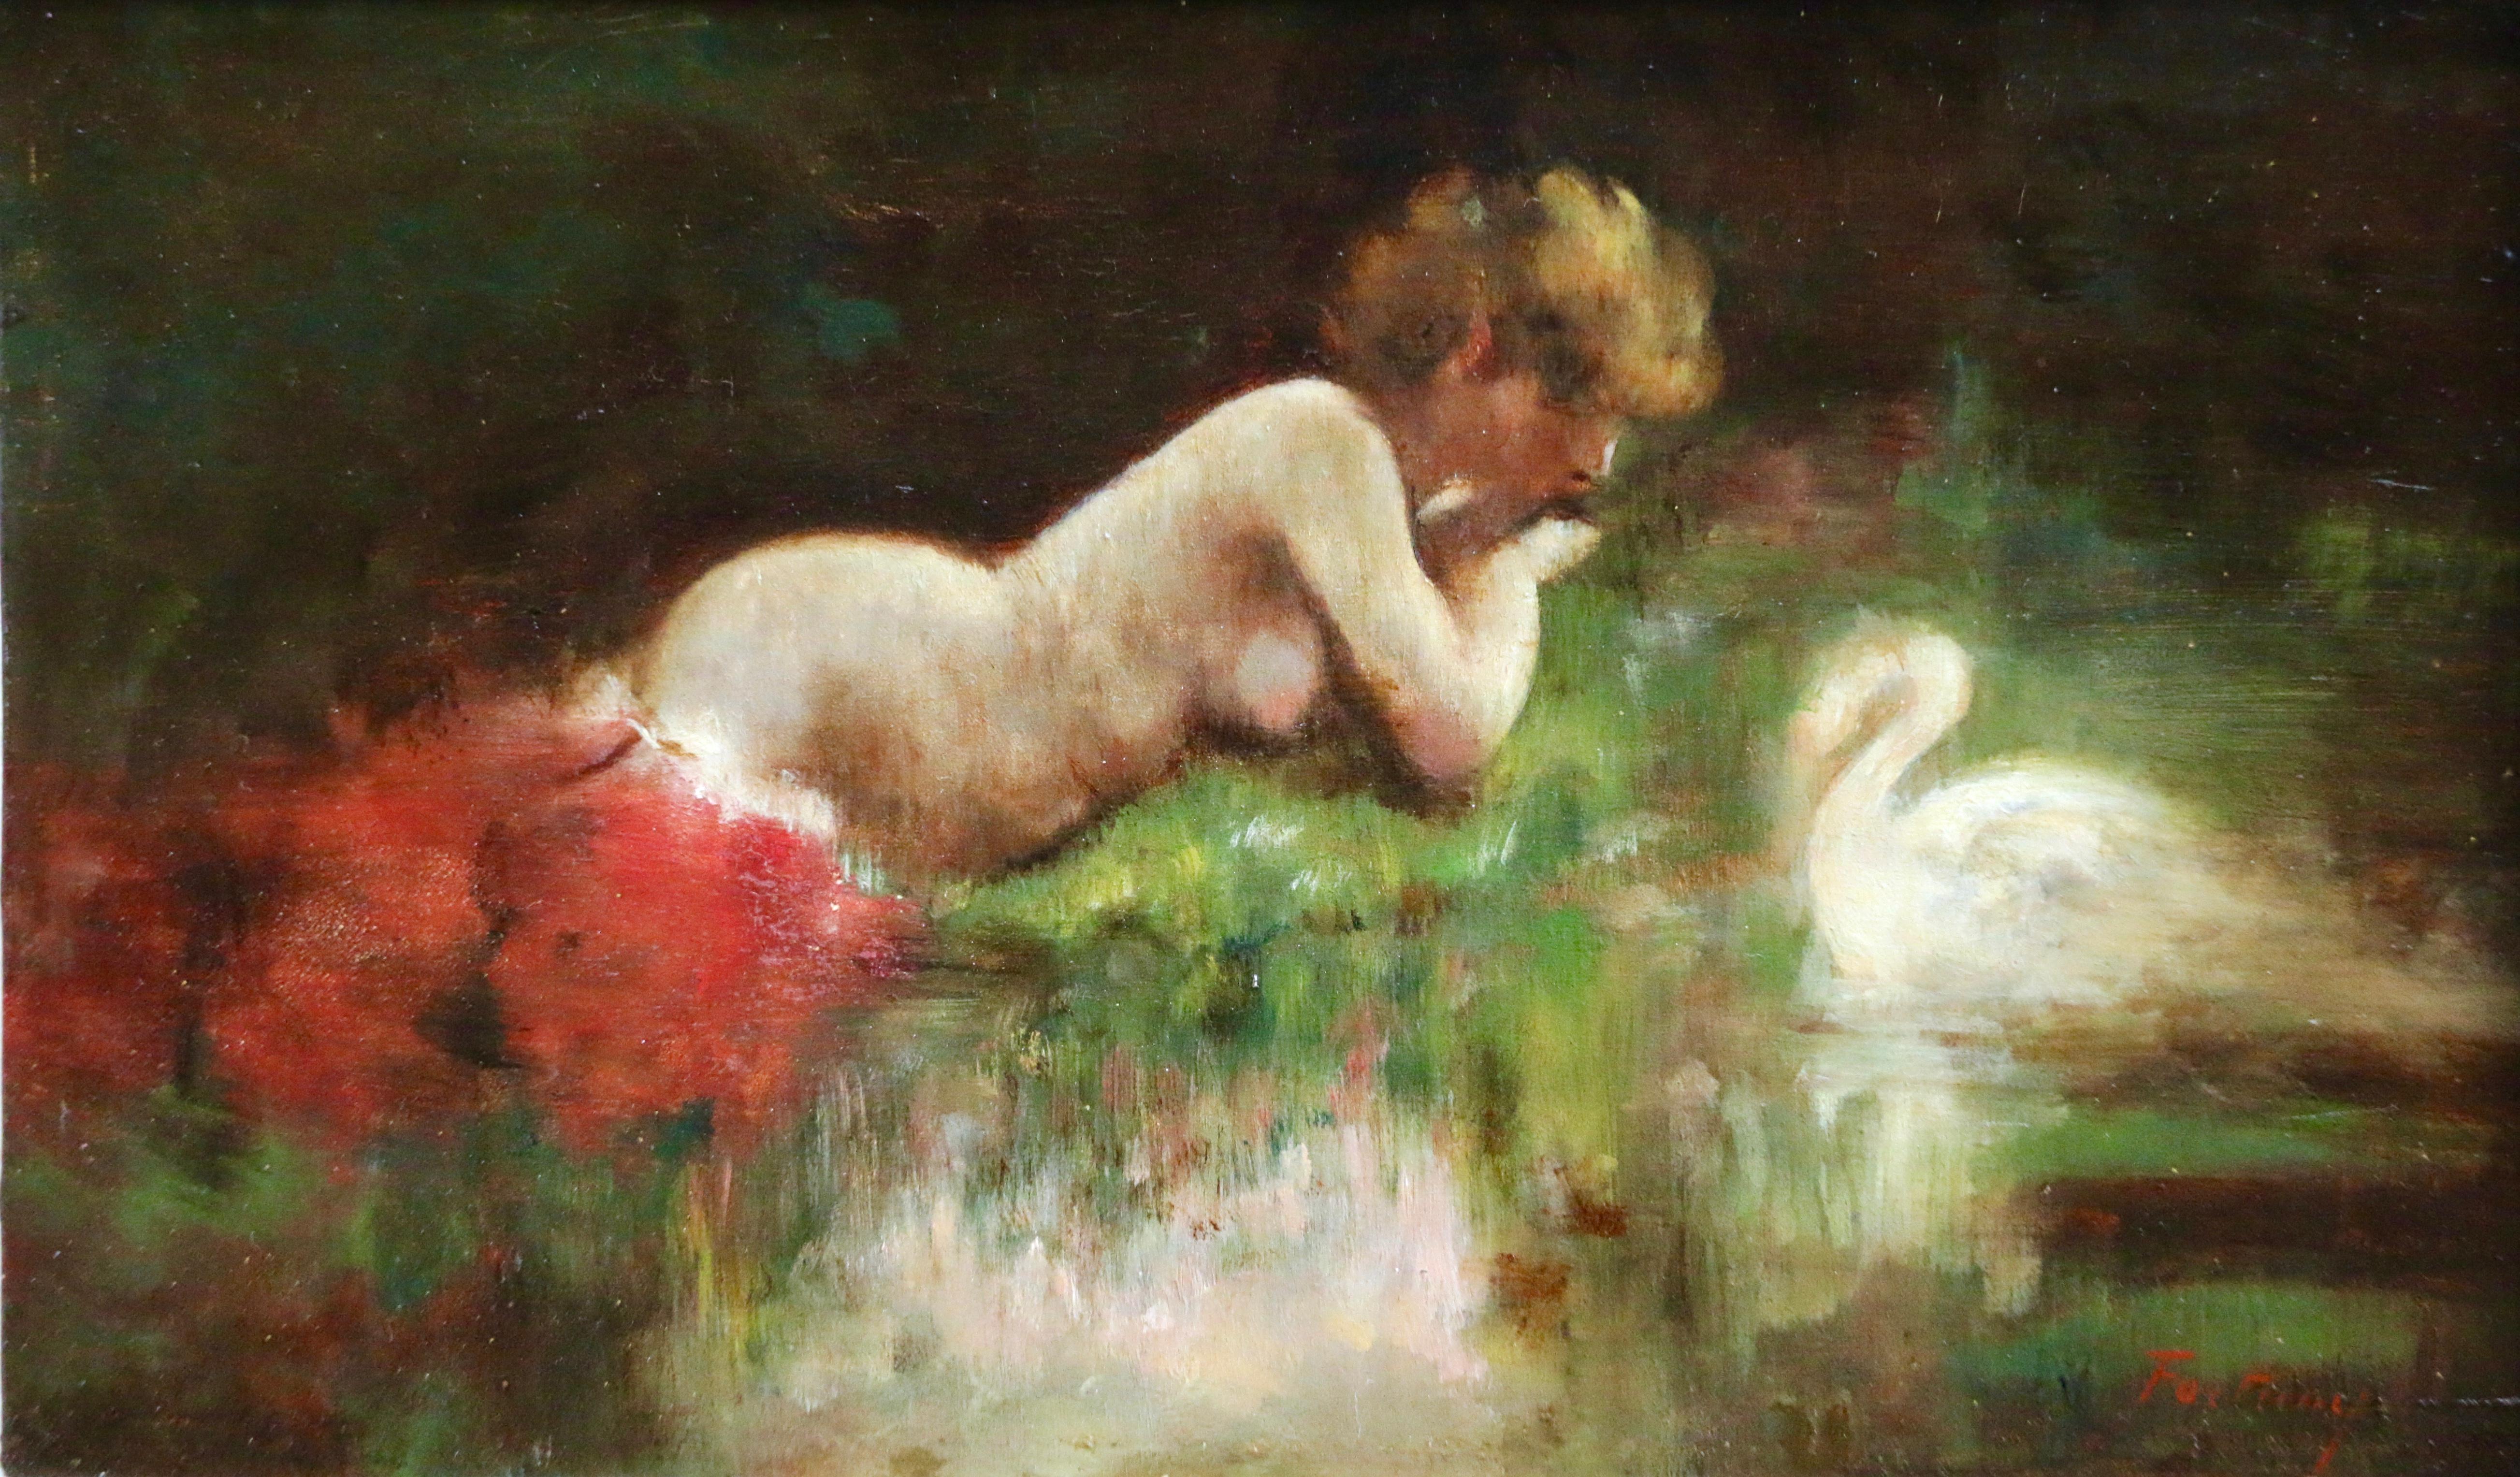 Mariano Fortuny Y Marsal Nude Painting - Leda and the Swan, Fortuny & Marsal, 19th Century Spanish Romantic Mythological